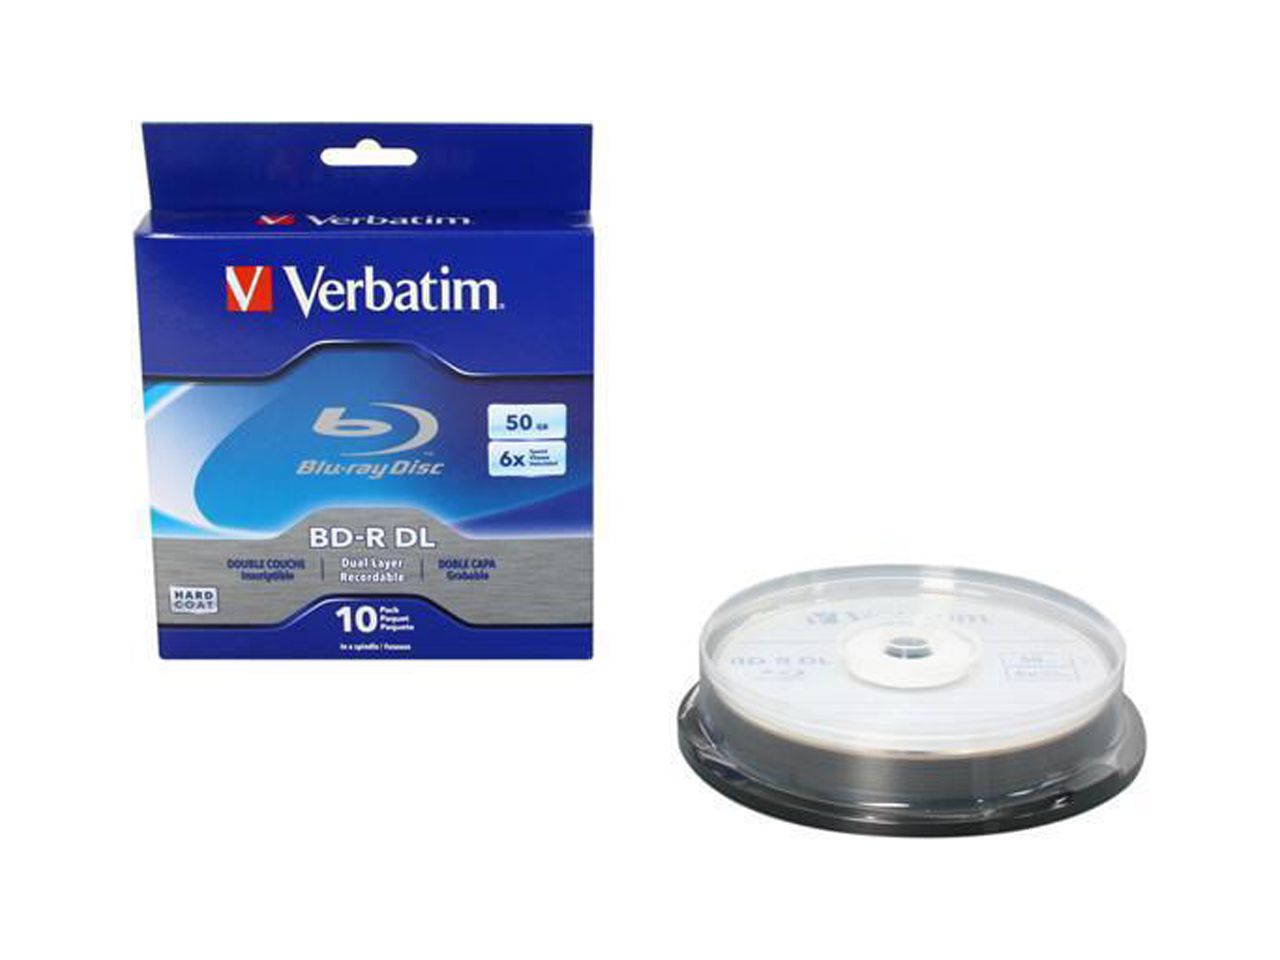 Verbatim 50GB 6X BD-R DL 10 Packs Spindle Disc Model 97335 - image 3 of 3